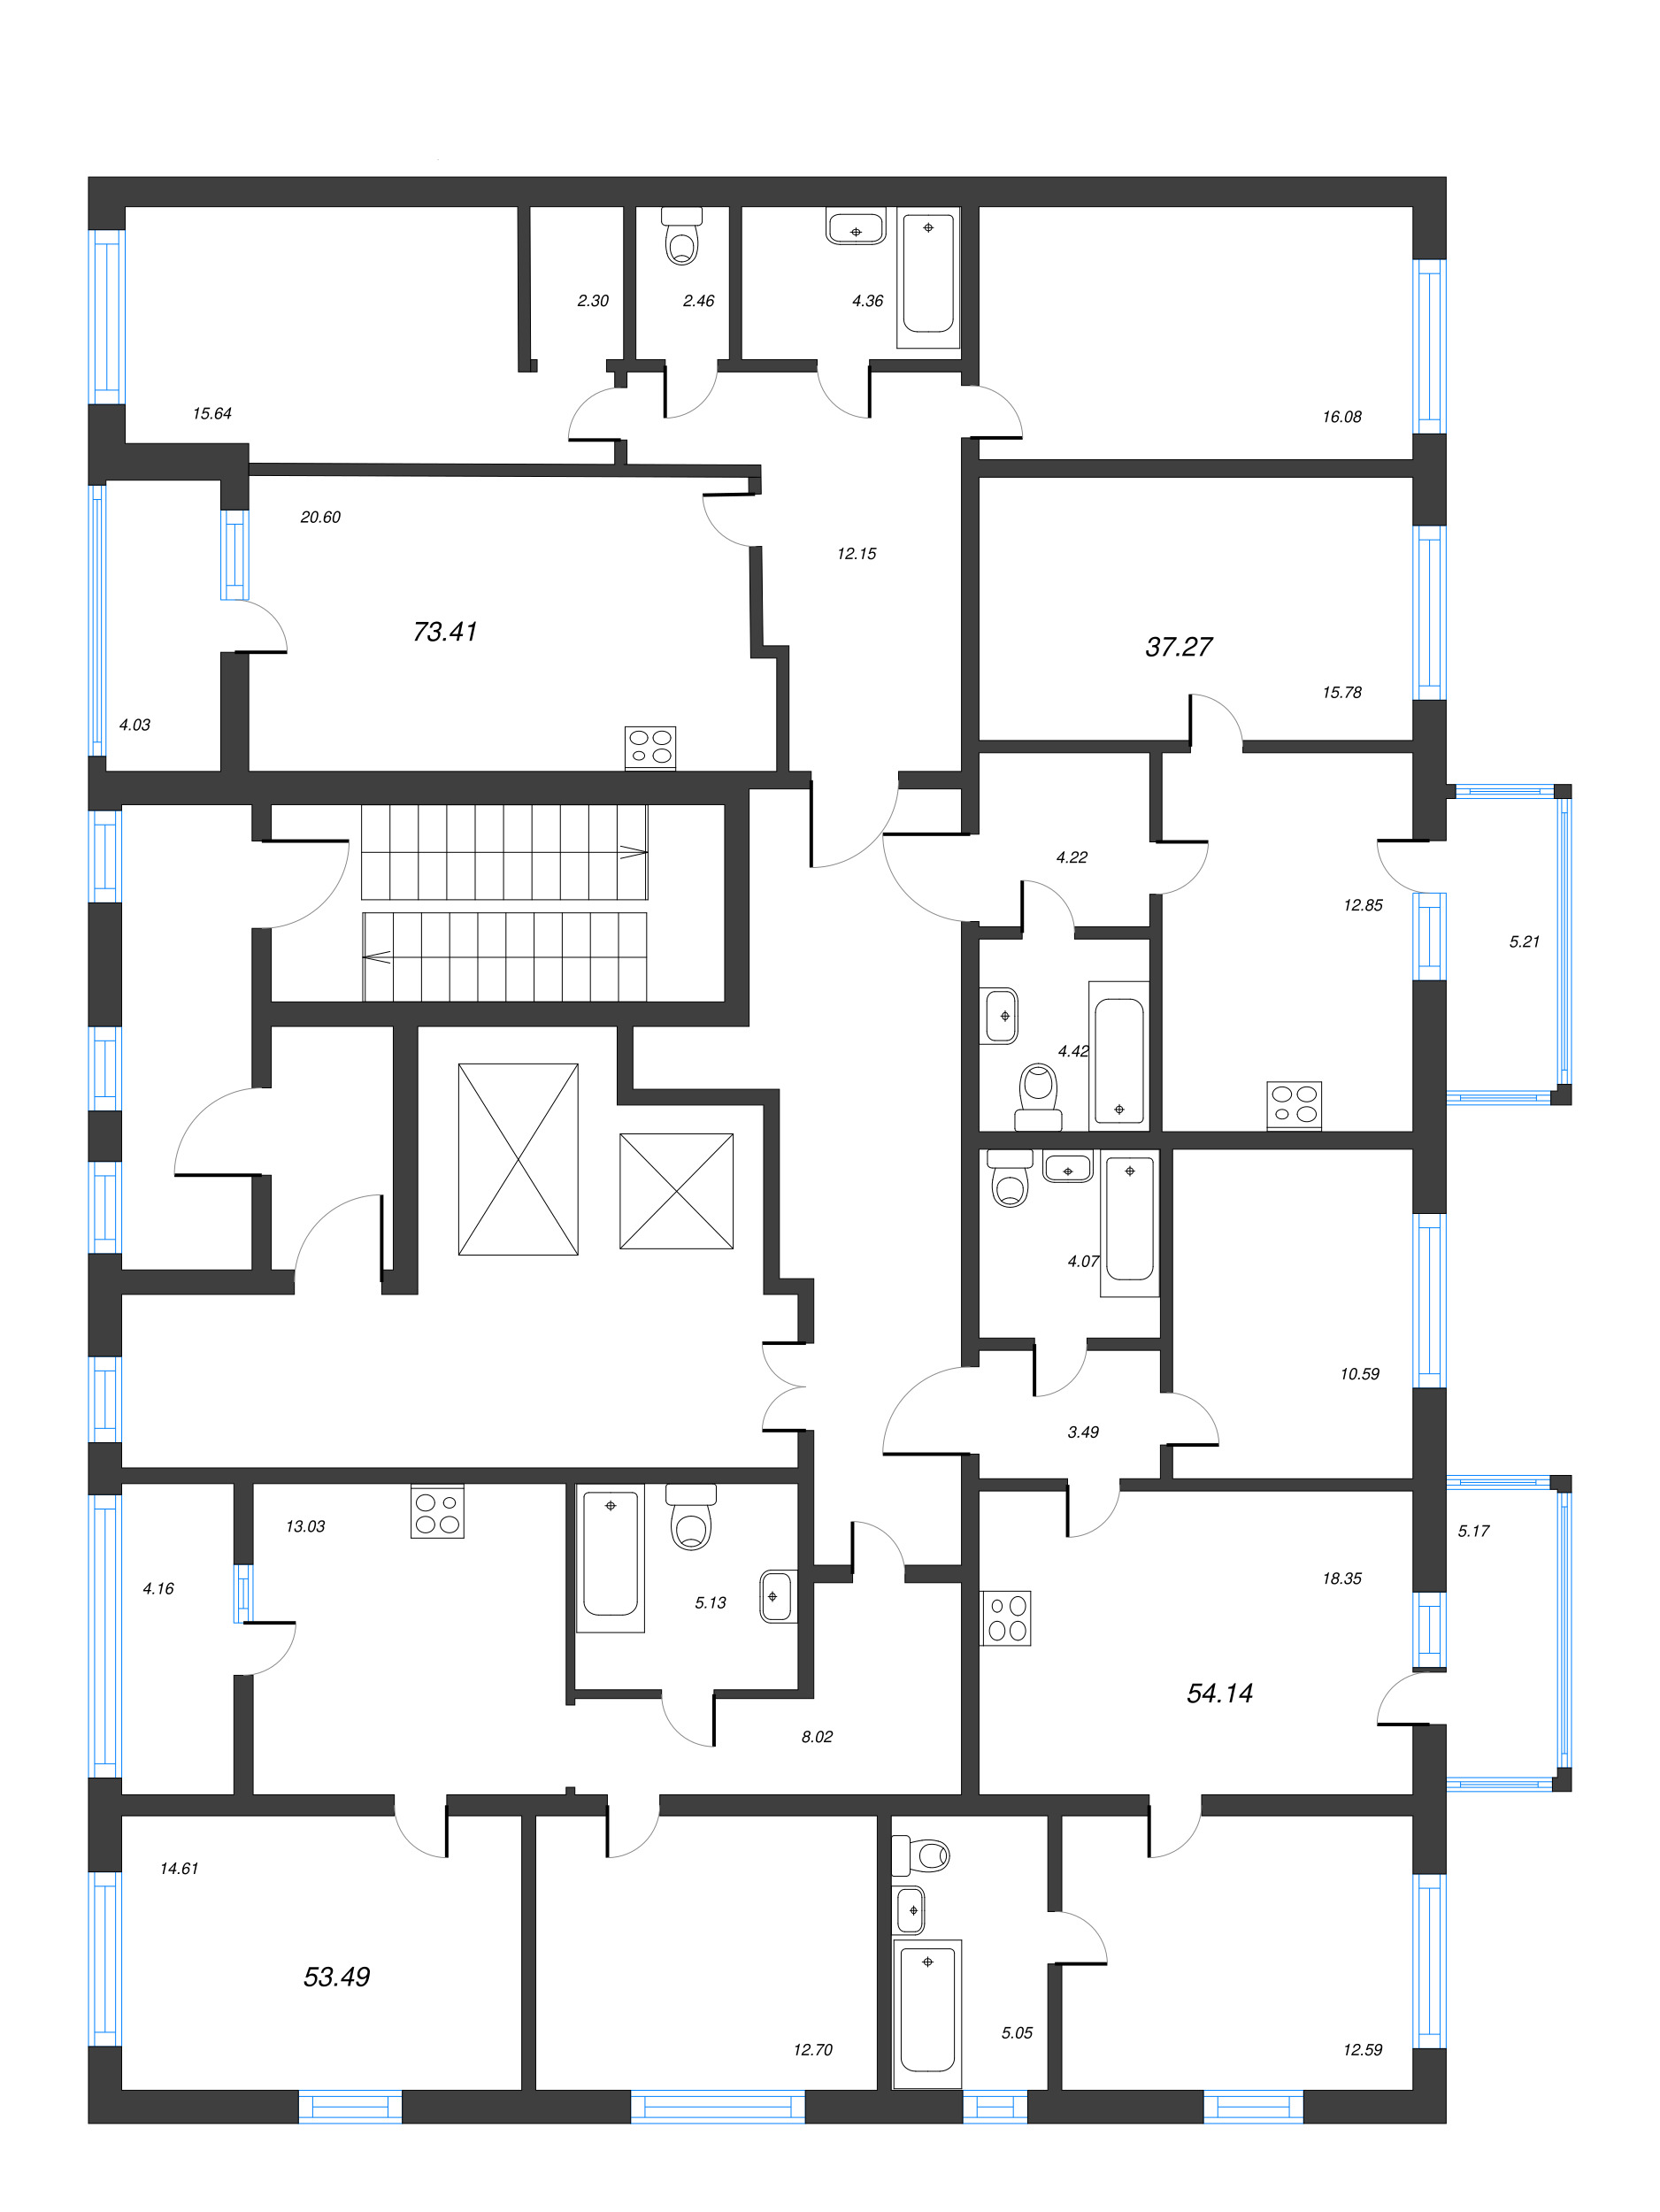 3-комнатная (Евро) квартира, 54.14 м² - планировка этажа